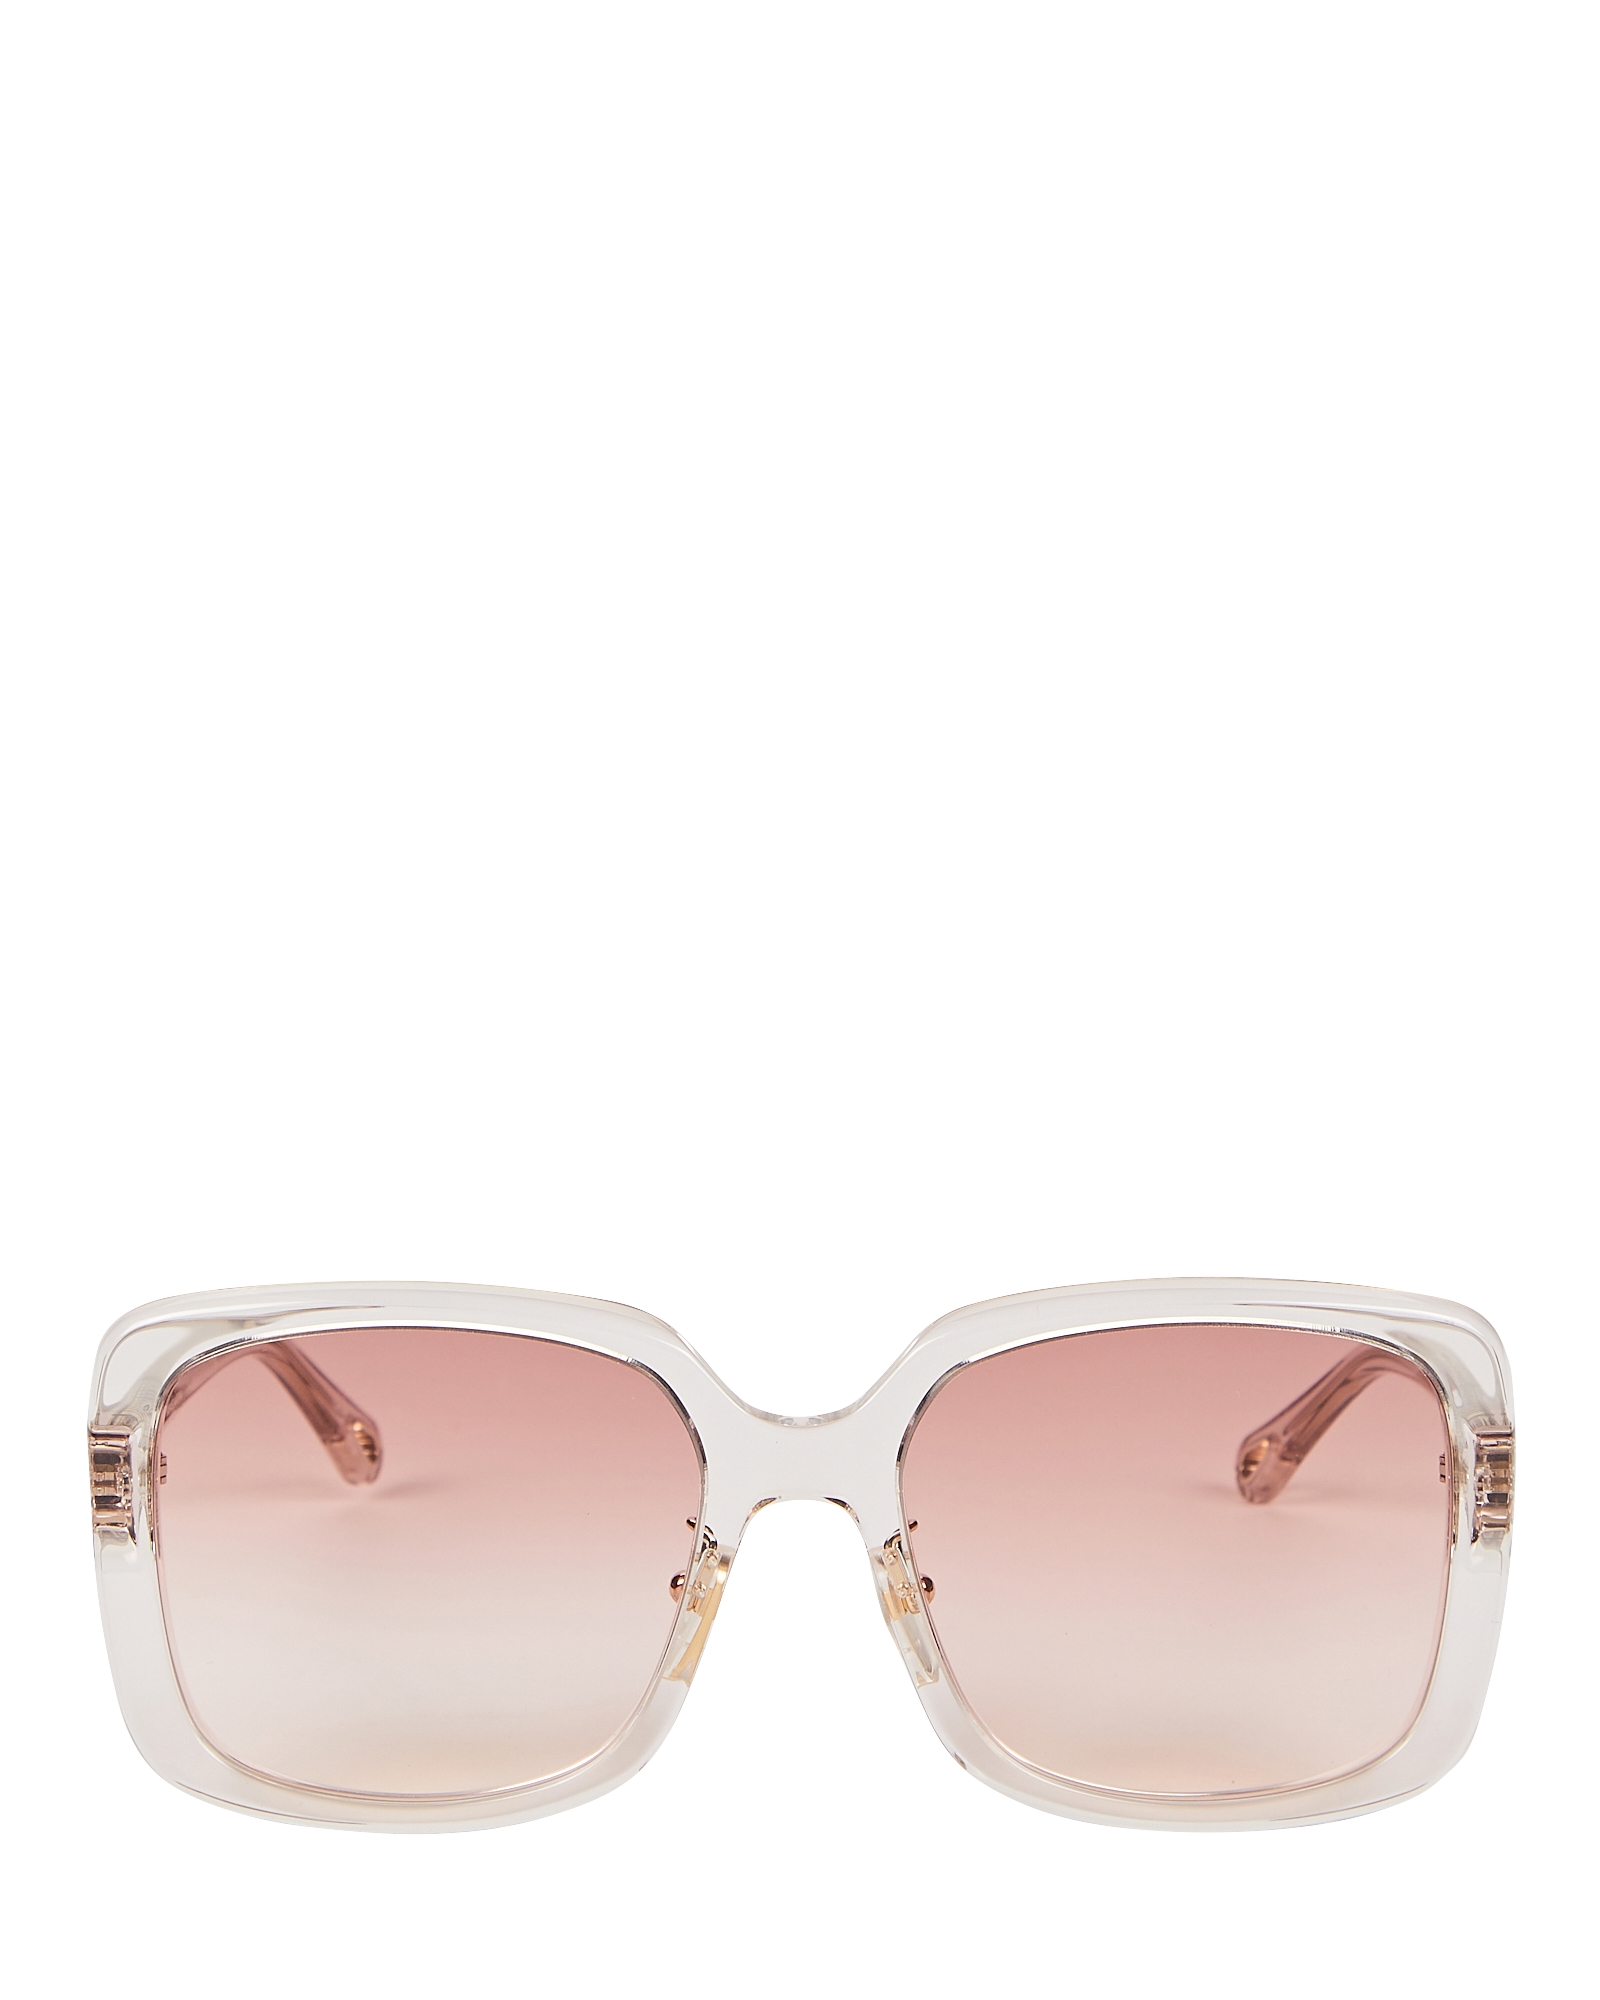 Chloé Ester Oversized Square Sunglasses | INTERMIX®